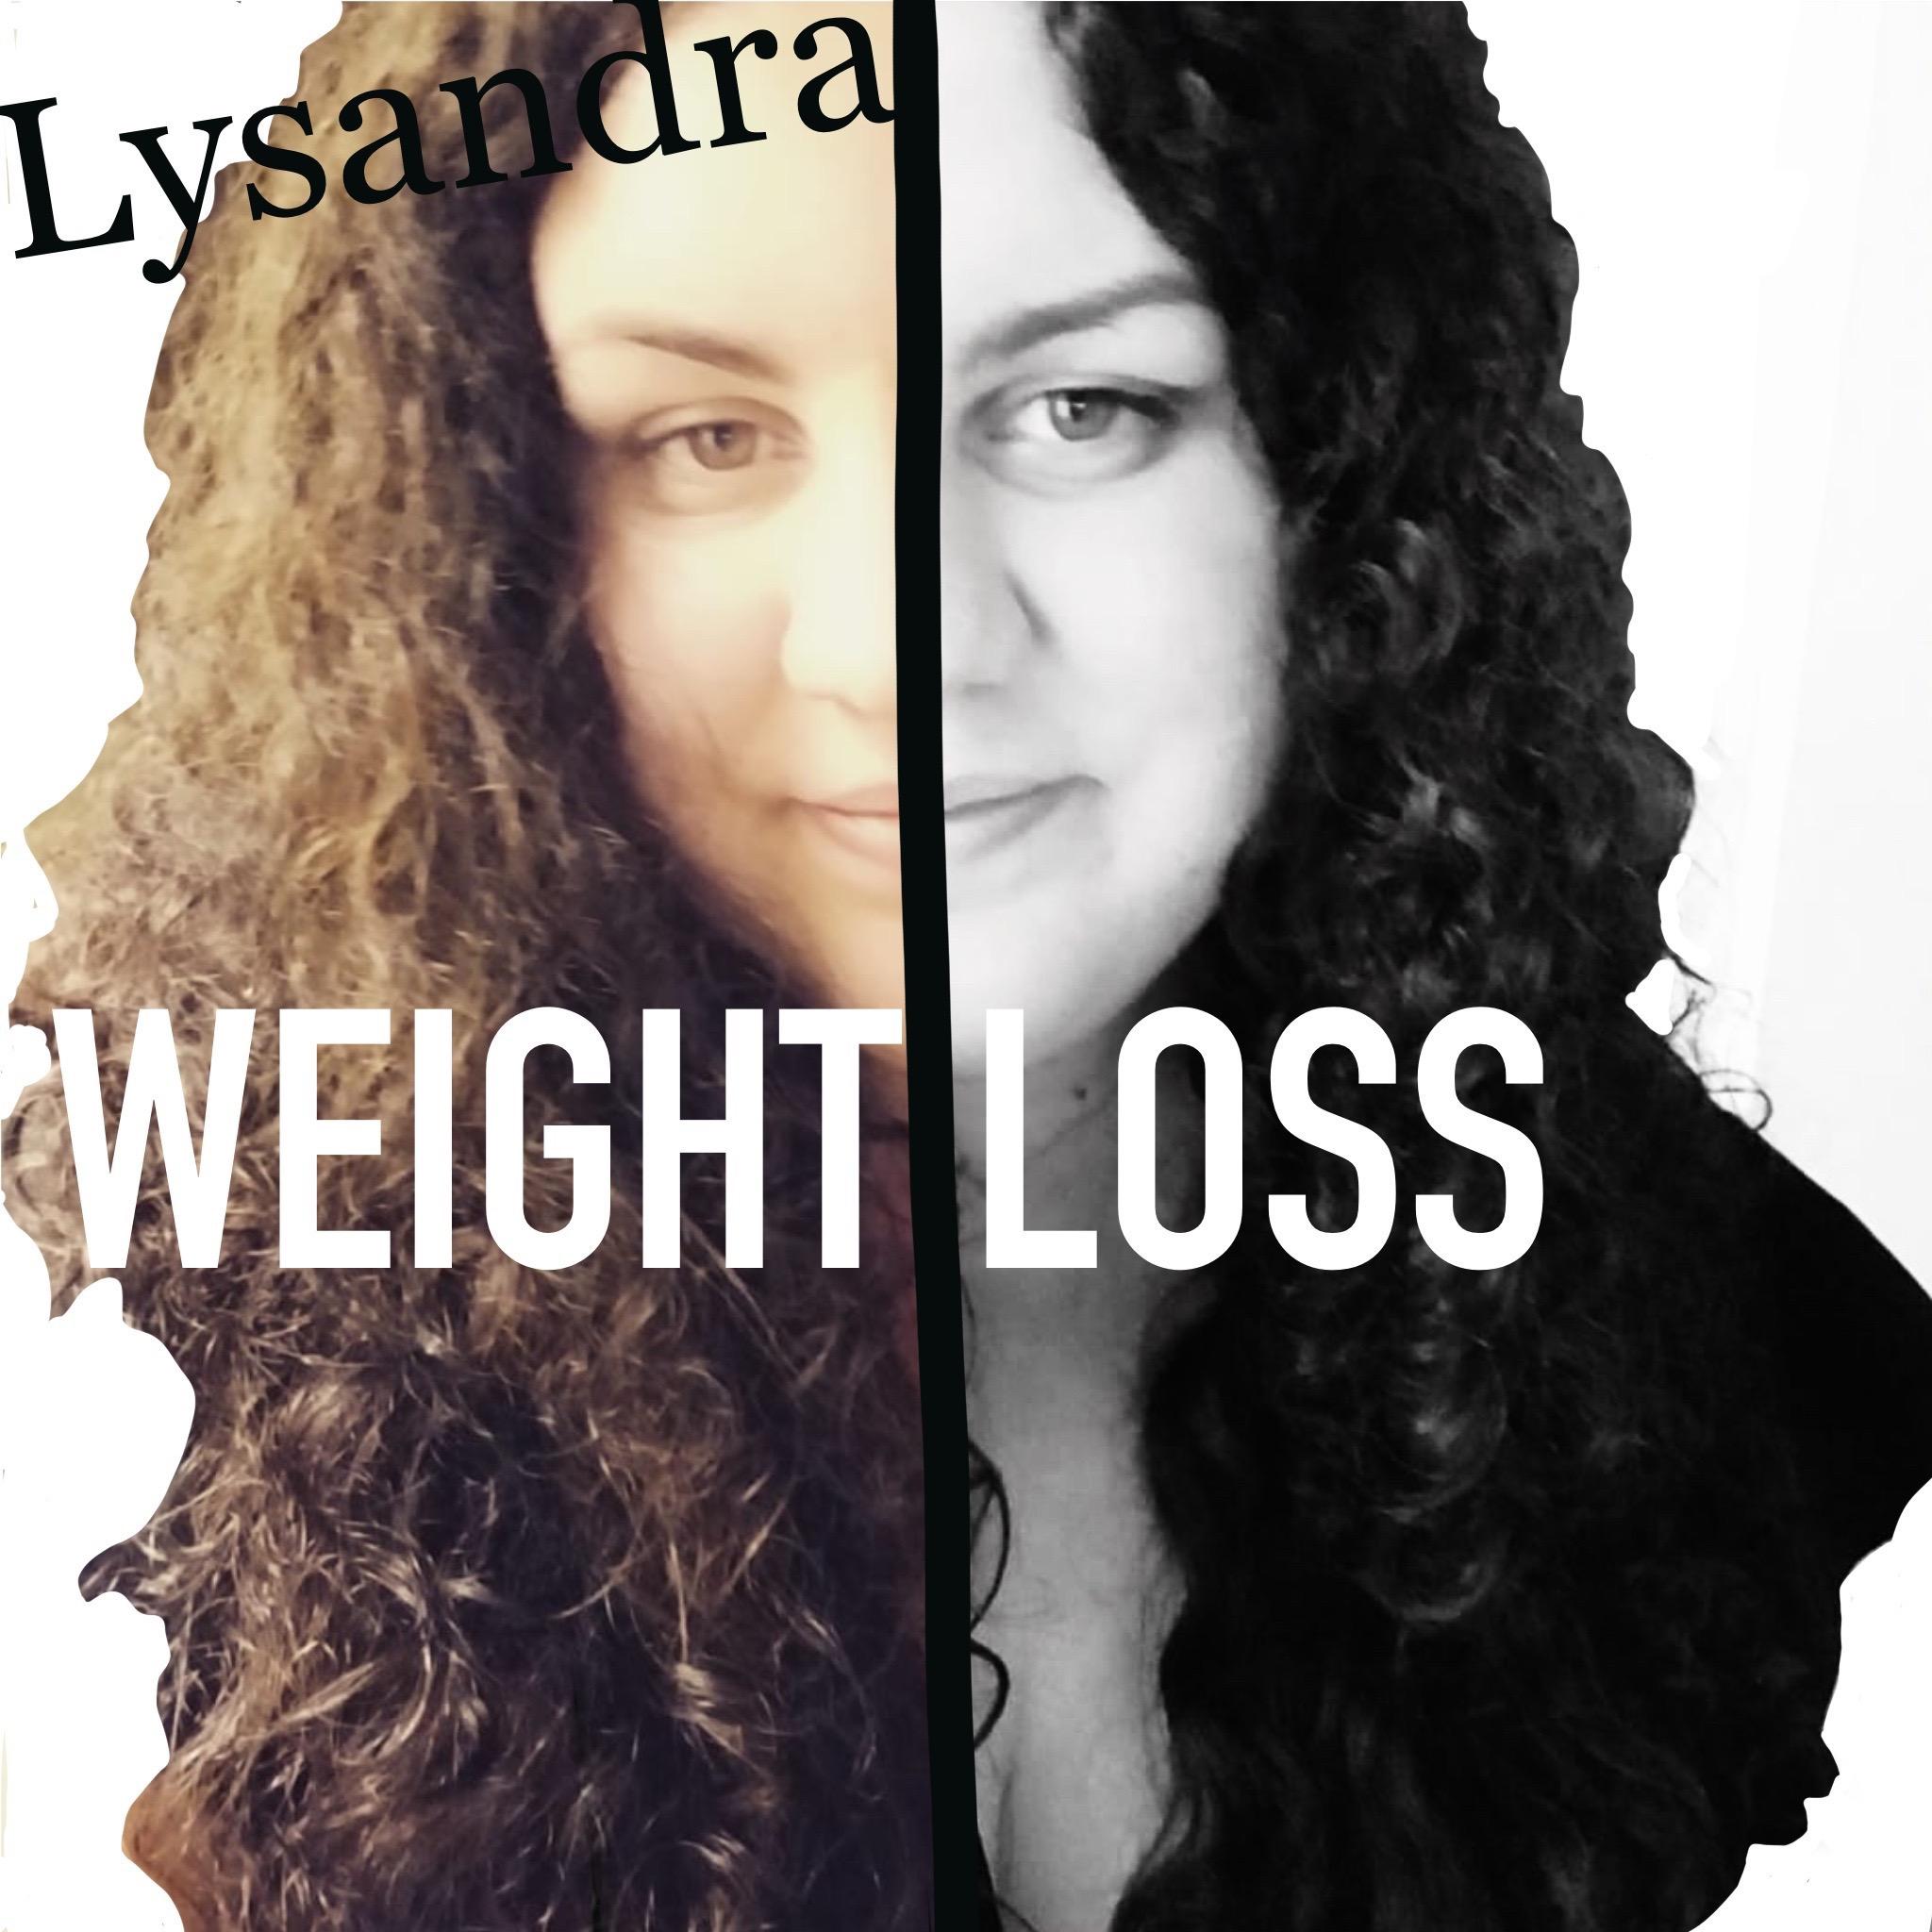 Lysandra Weight Loss